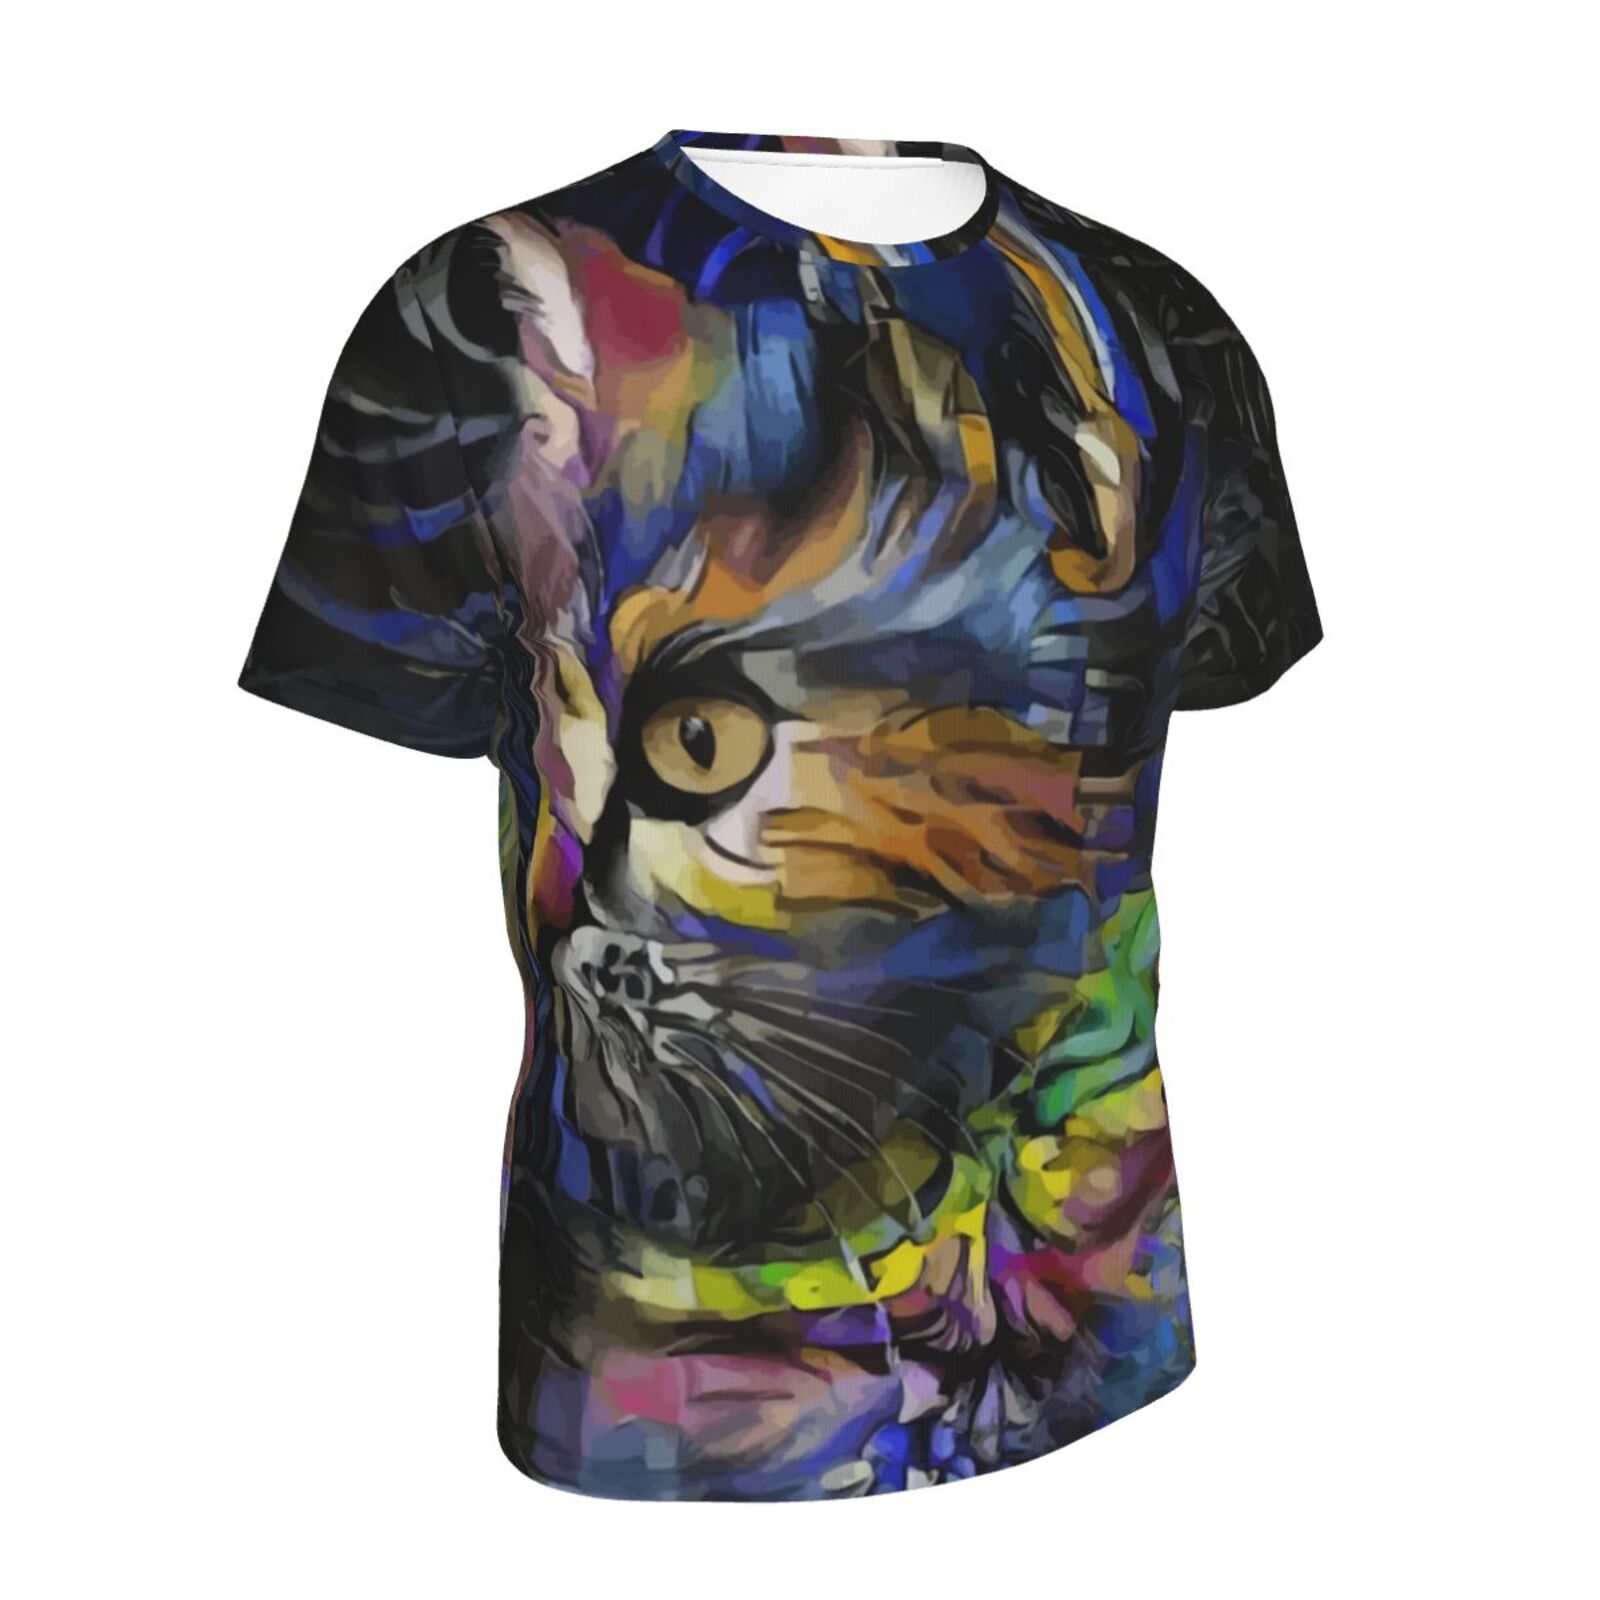 Ogour Katze Medien Mischen Elemente Klassisch Belgien T-shirt